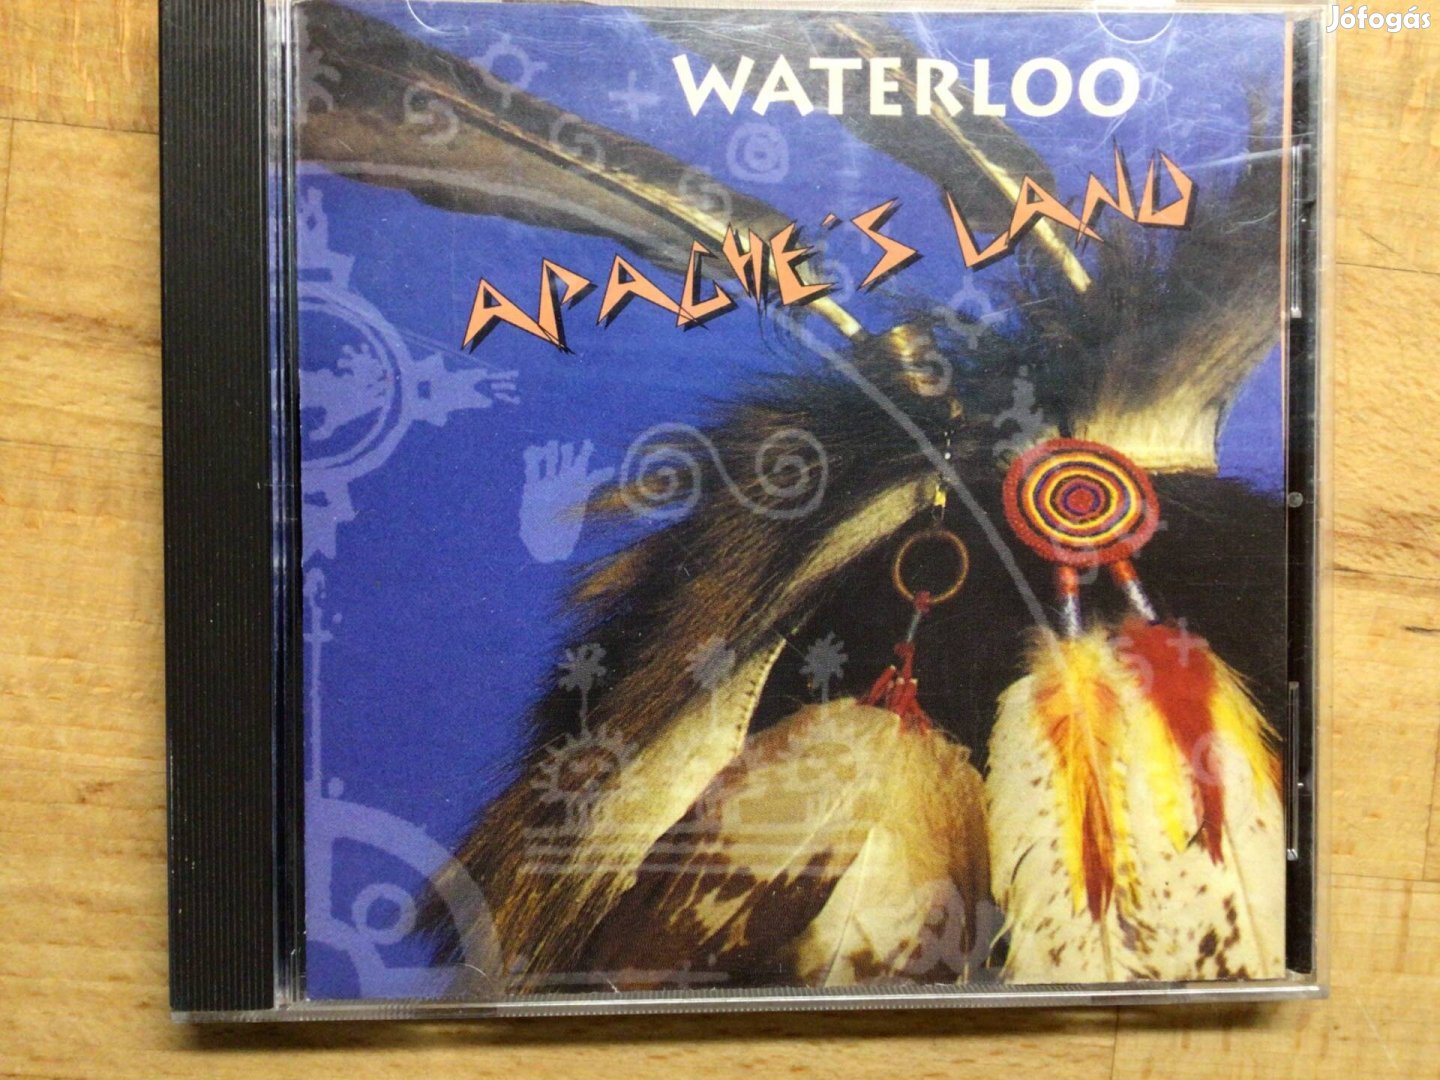 Waterloo- Apache s Land